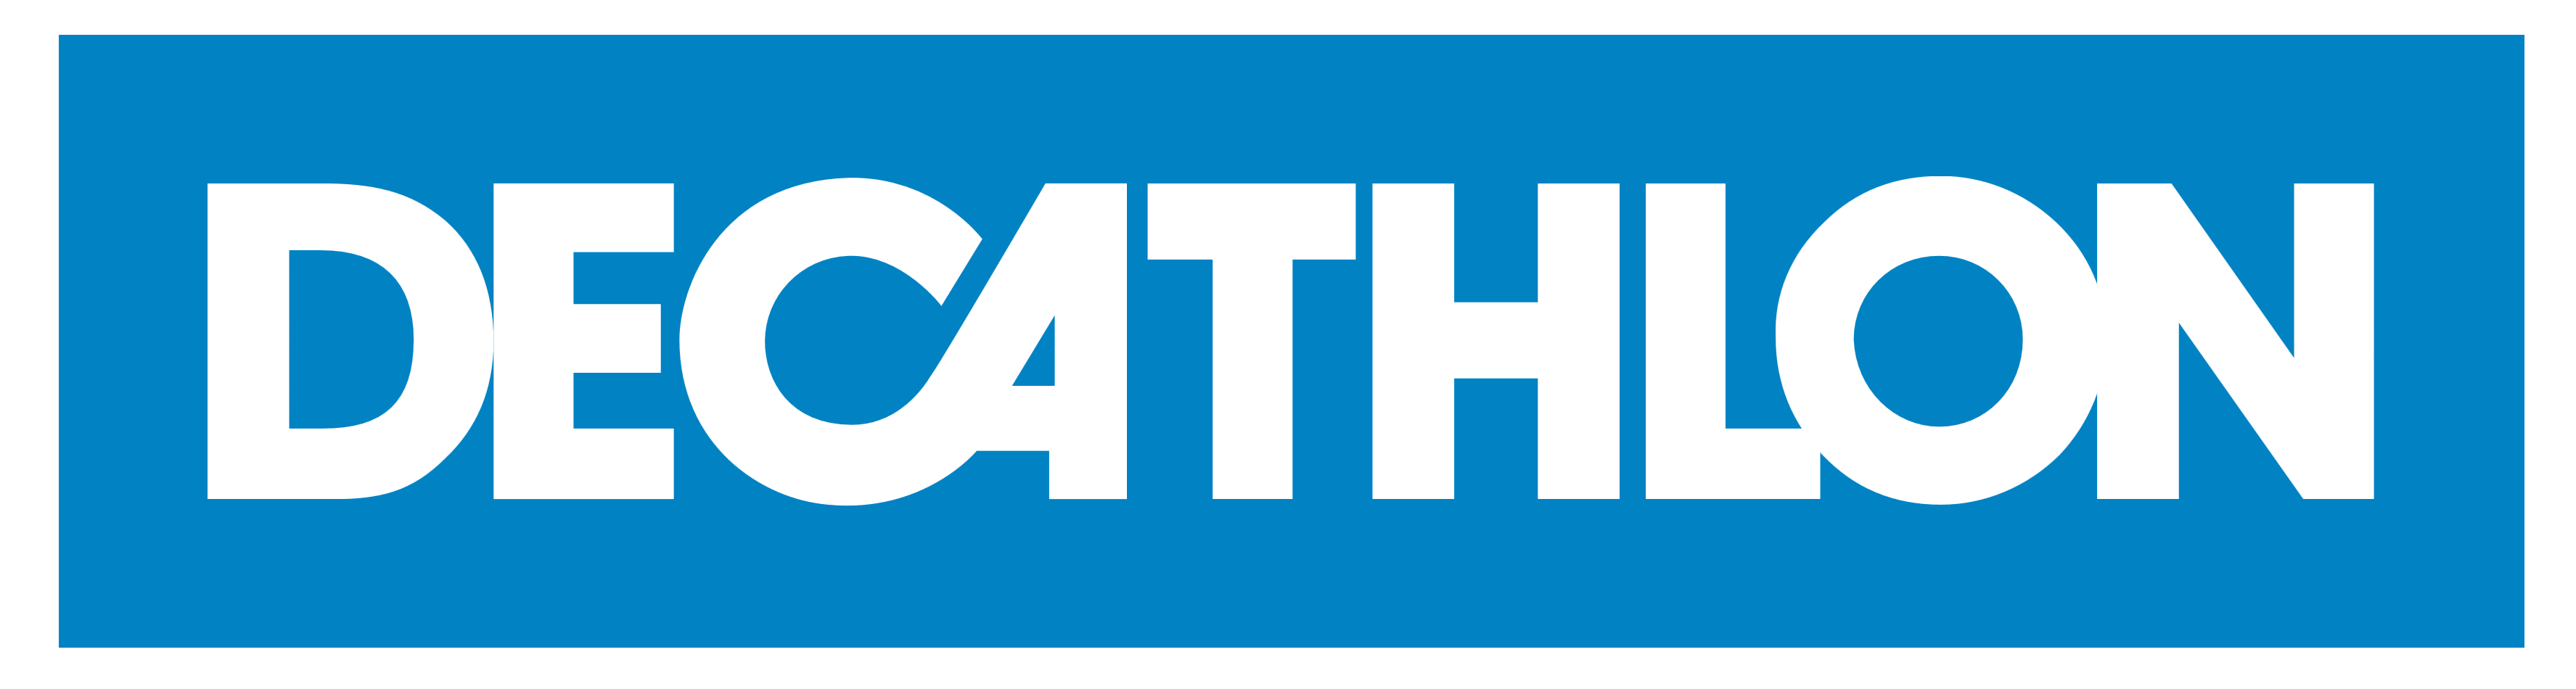 Decathlon logo, logotype